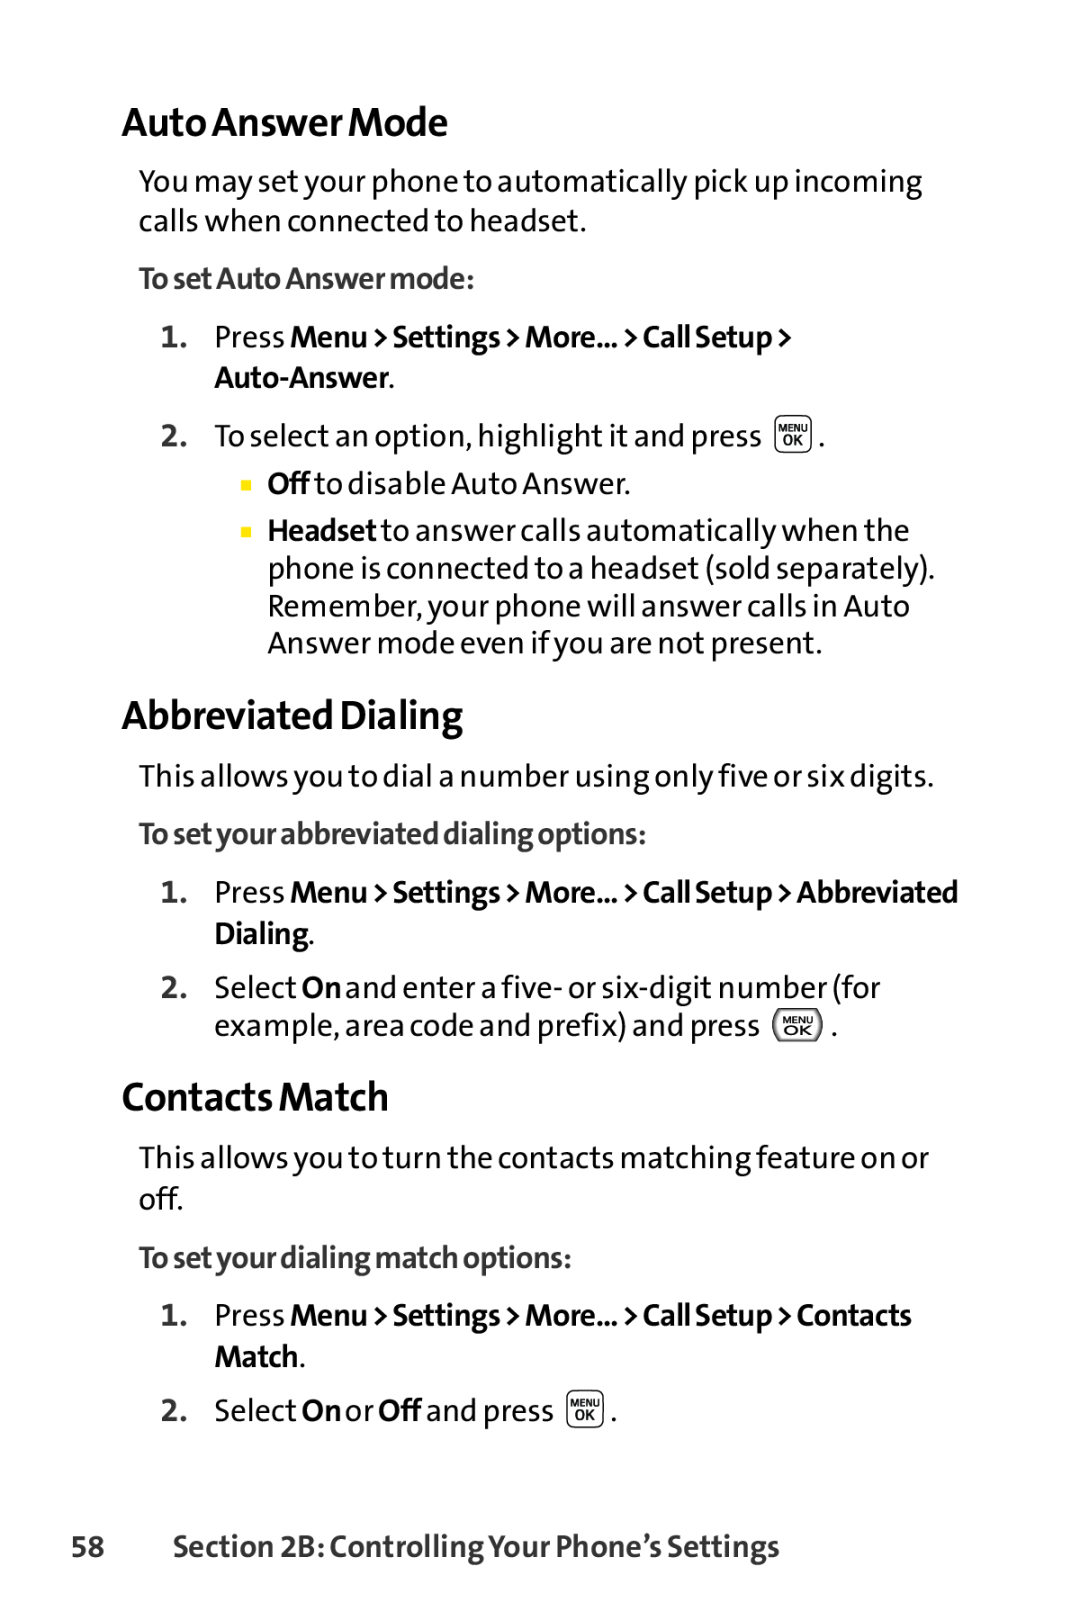 Sprint Nextel LX160 manual Auto Answer Mode, Abbreviated Dialing, Contacts Match, TosetAutoAnswermode 